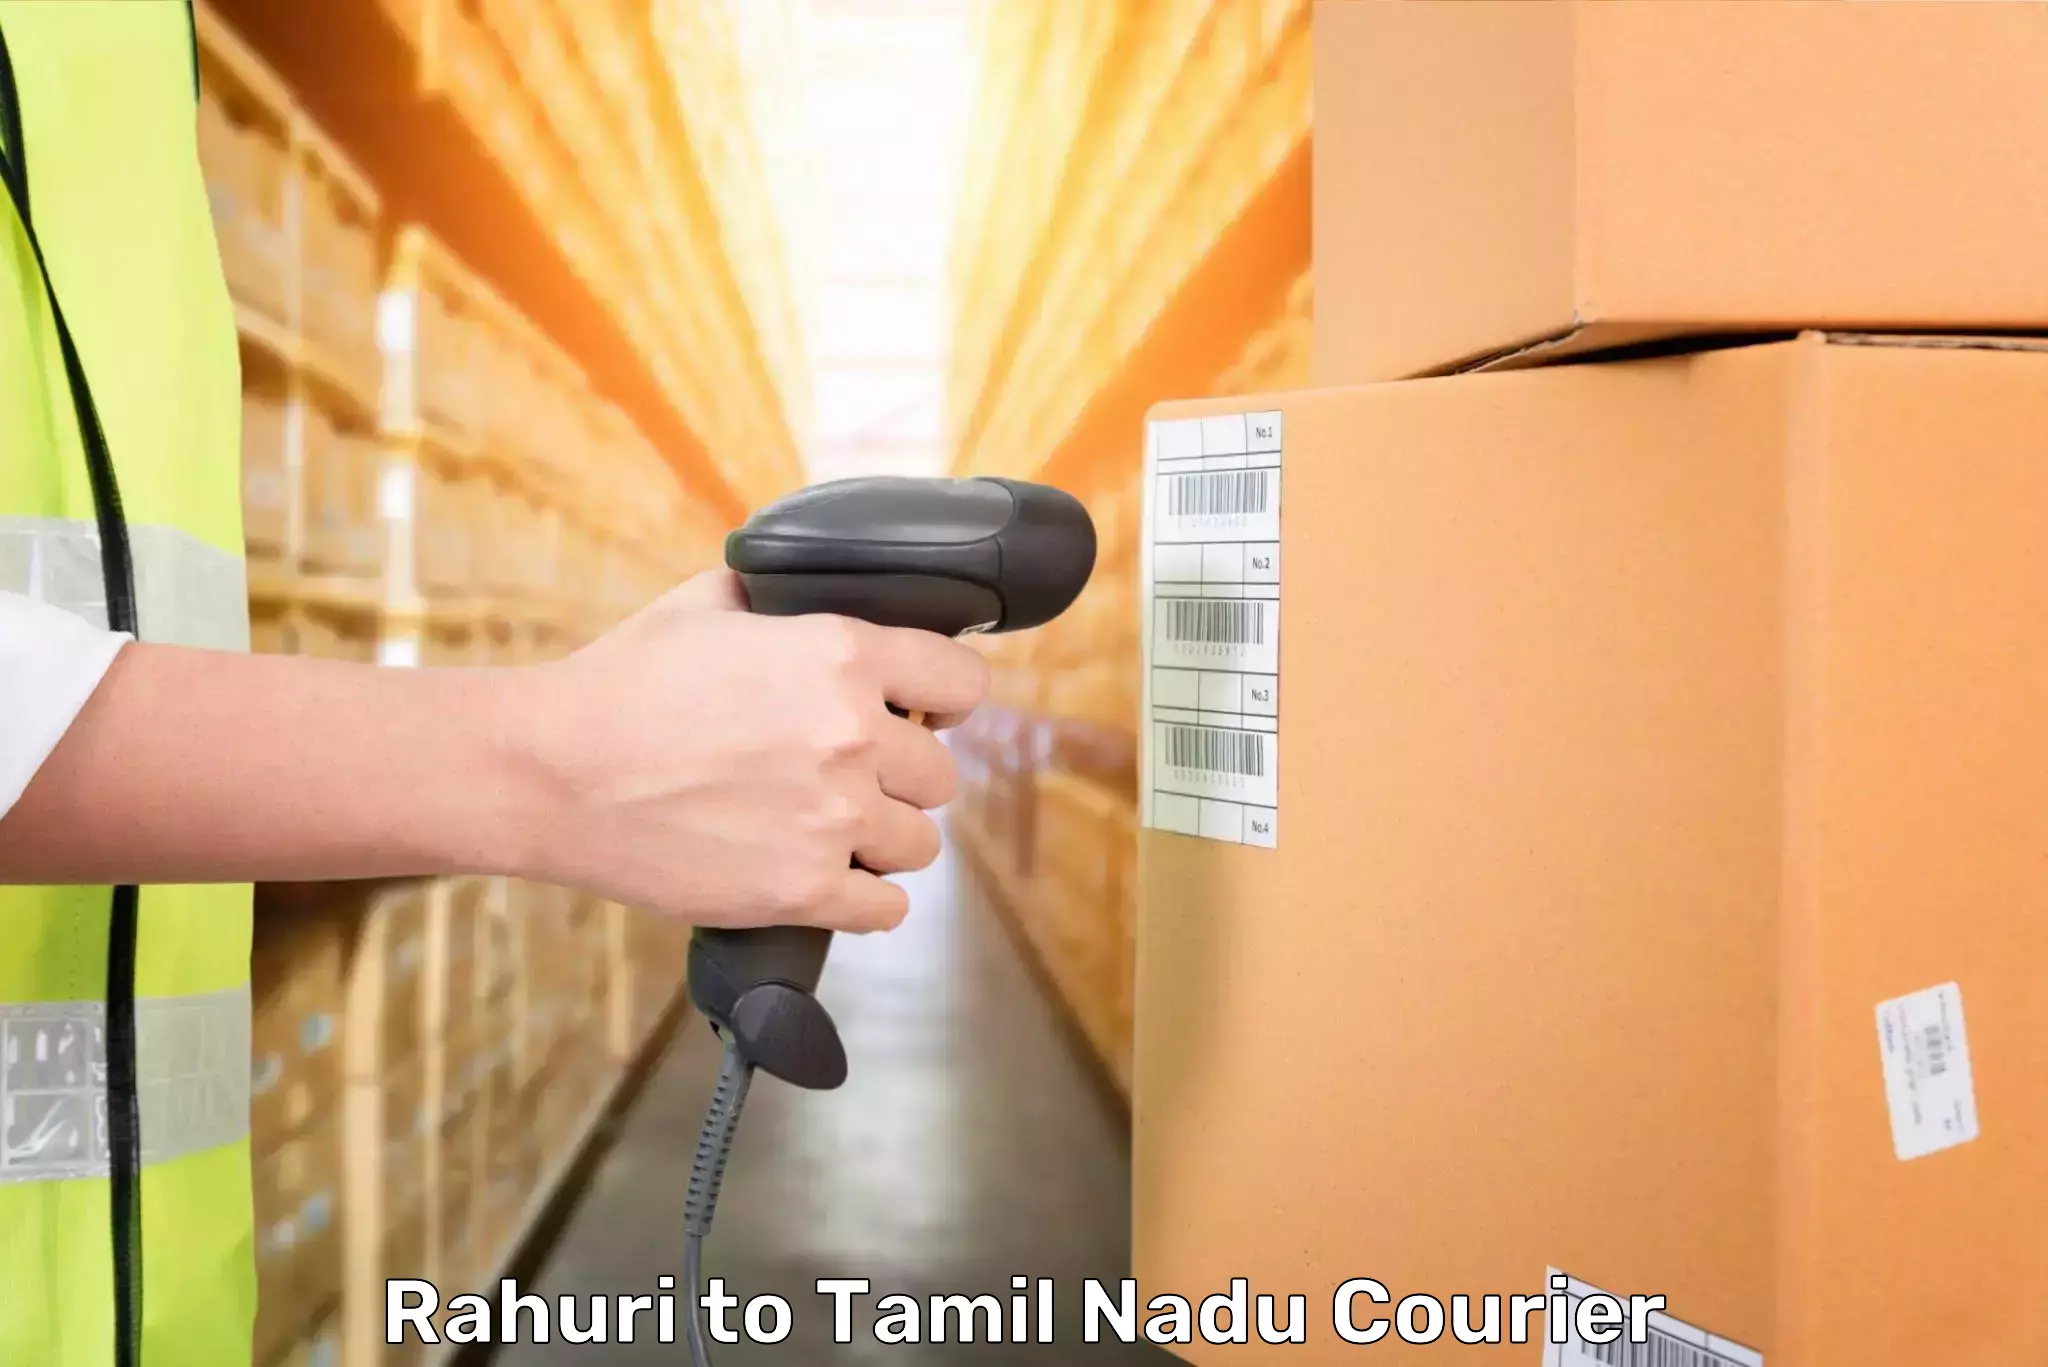 Luggage delivery app Rahuri to Tamil Nadu